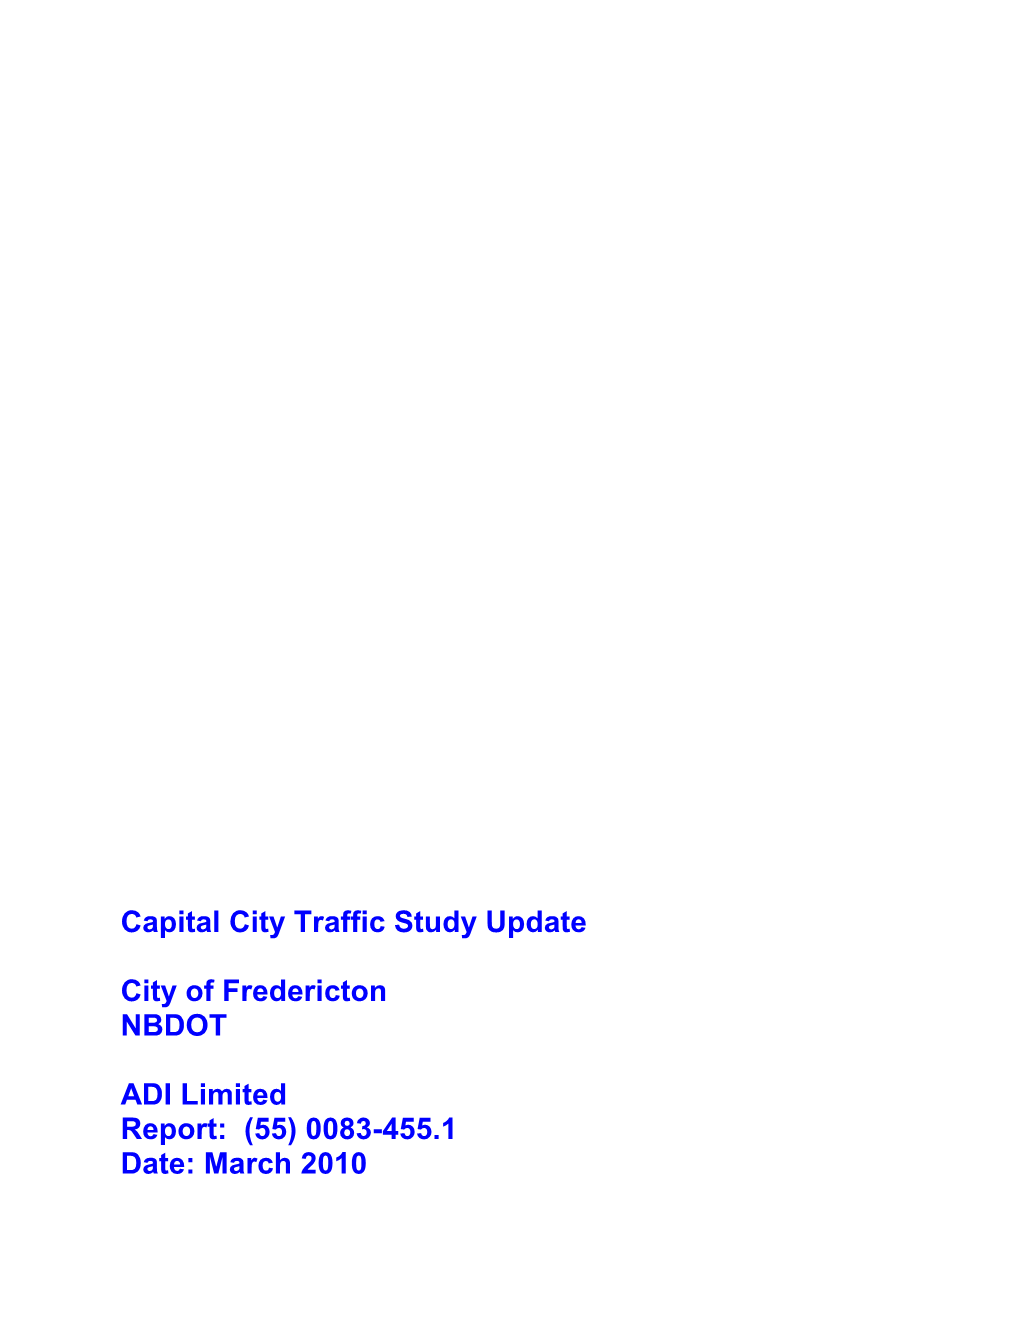 Capital City Traffic Study Update City of Fredericton NBDOT ADI Limited Report